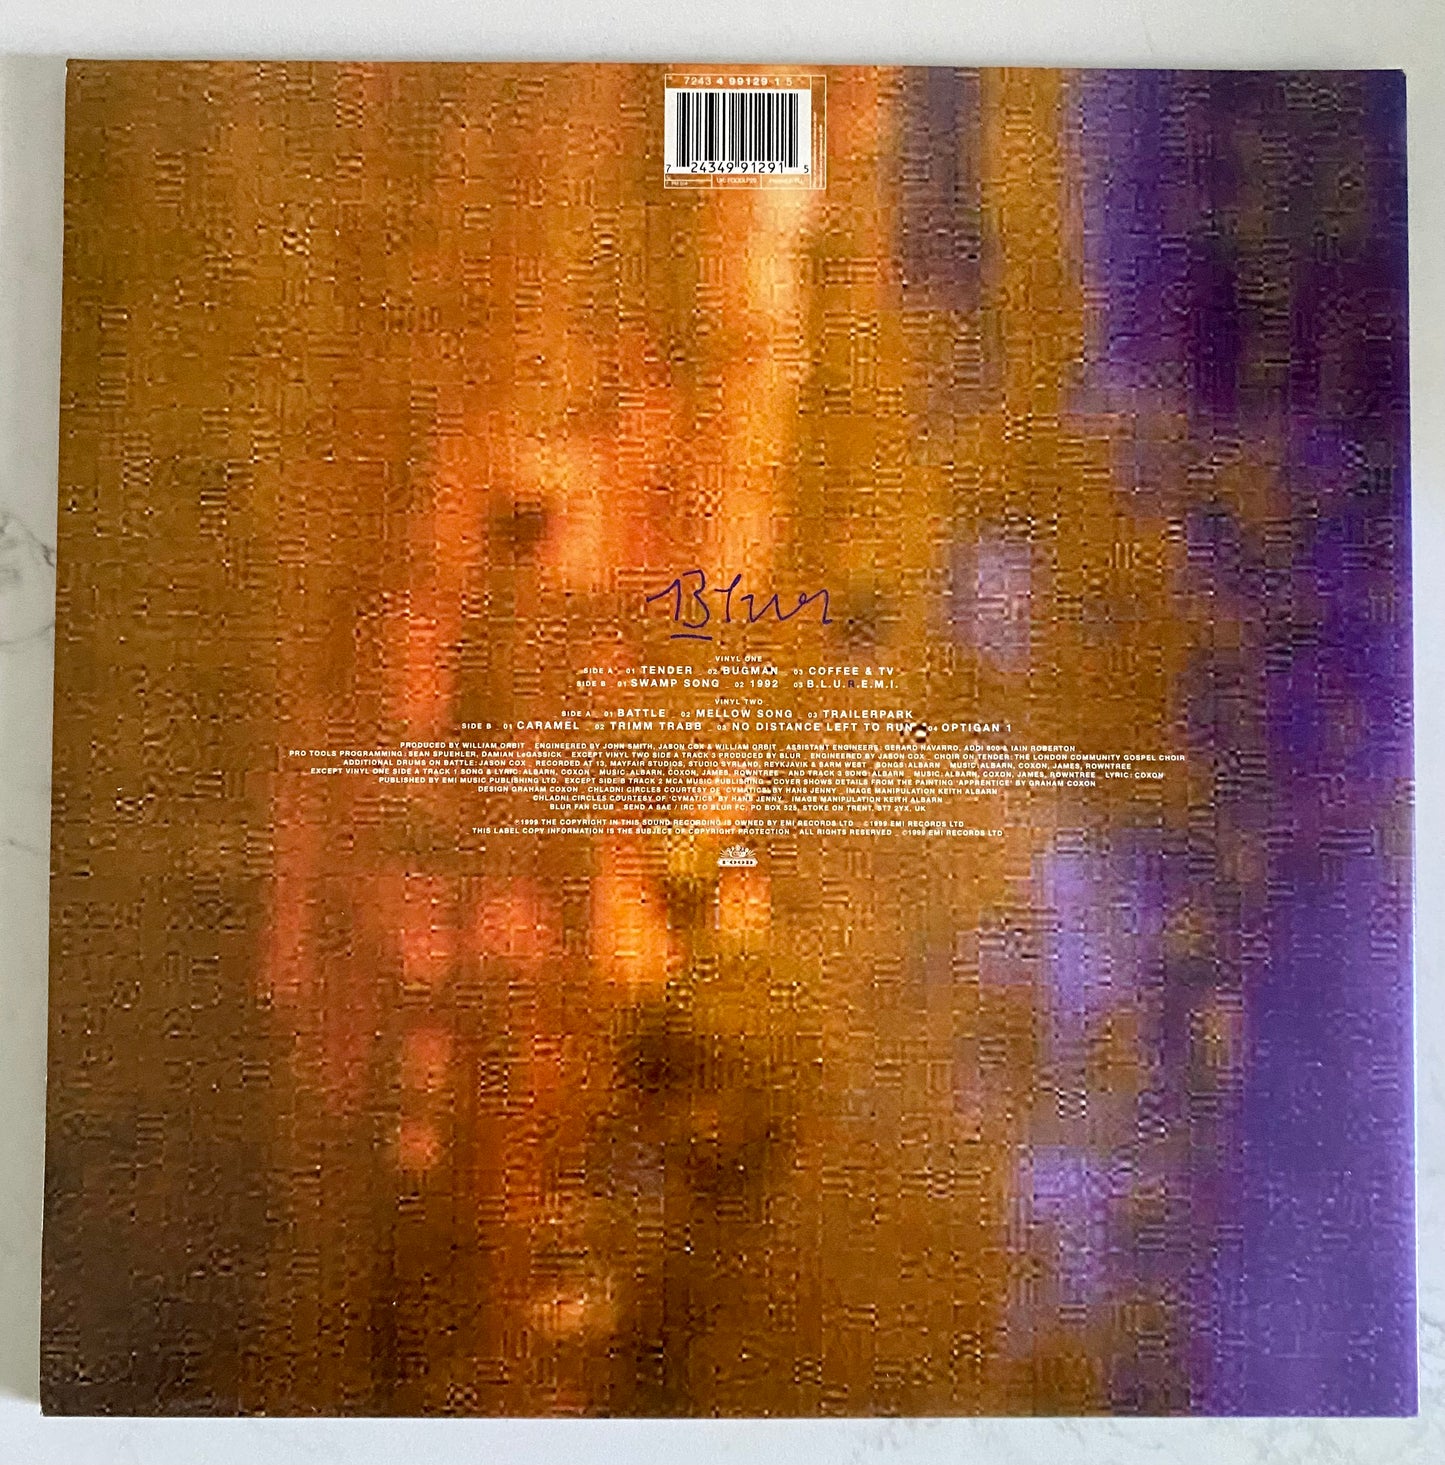 Blur - 13 (2xLP, Album). ROCK